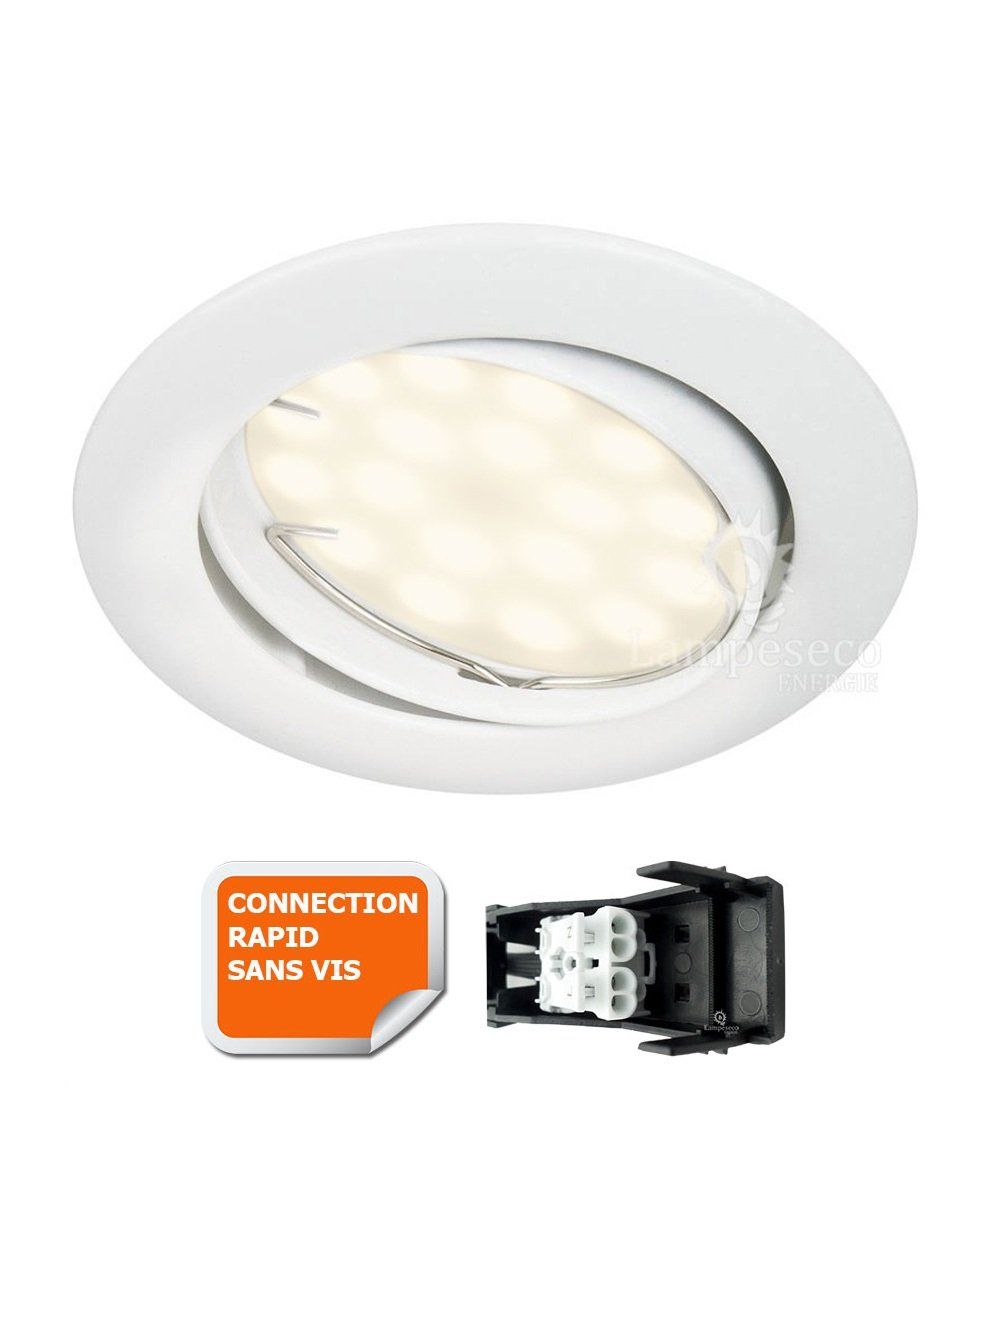 Spot led orientable blanc avec ampoule gu10 230v eq. 50w, blanc chaud